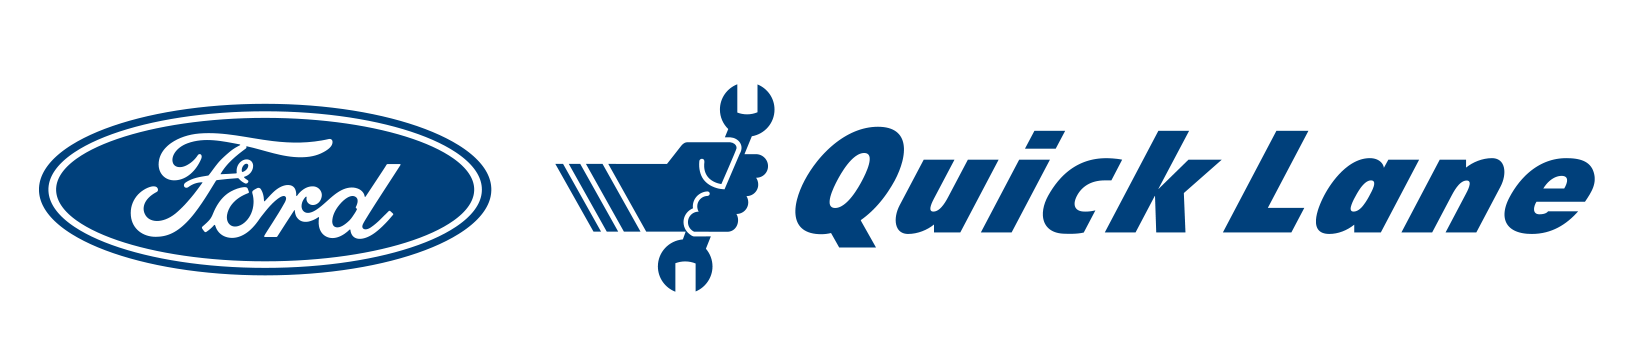 quicklane logo 1640x350